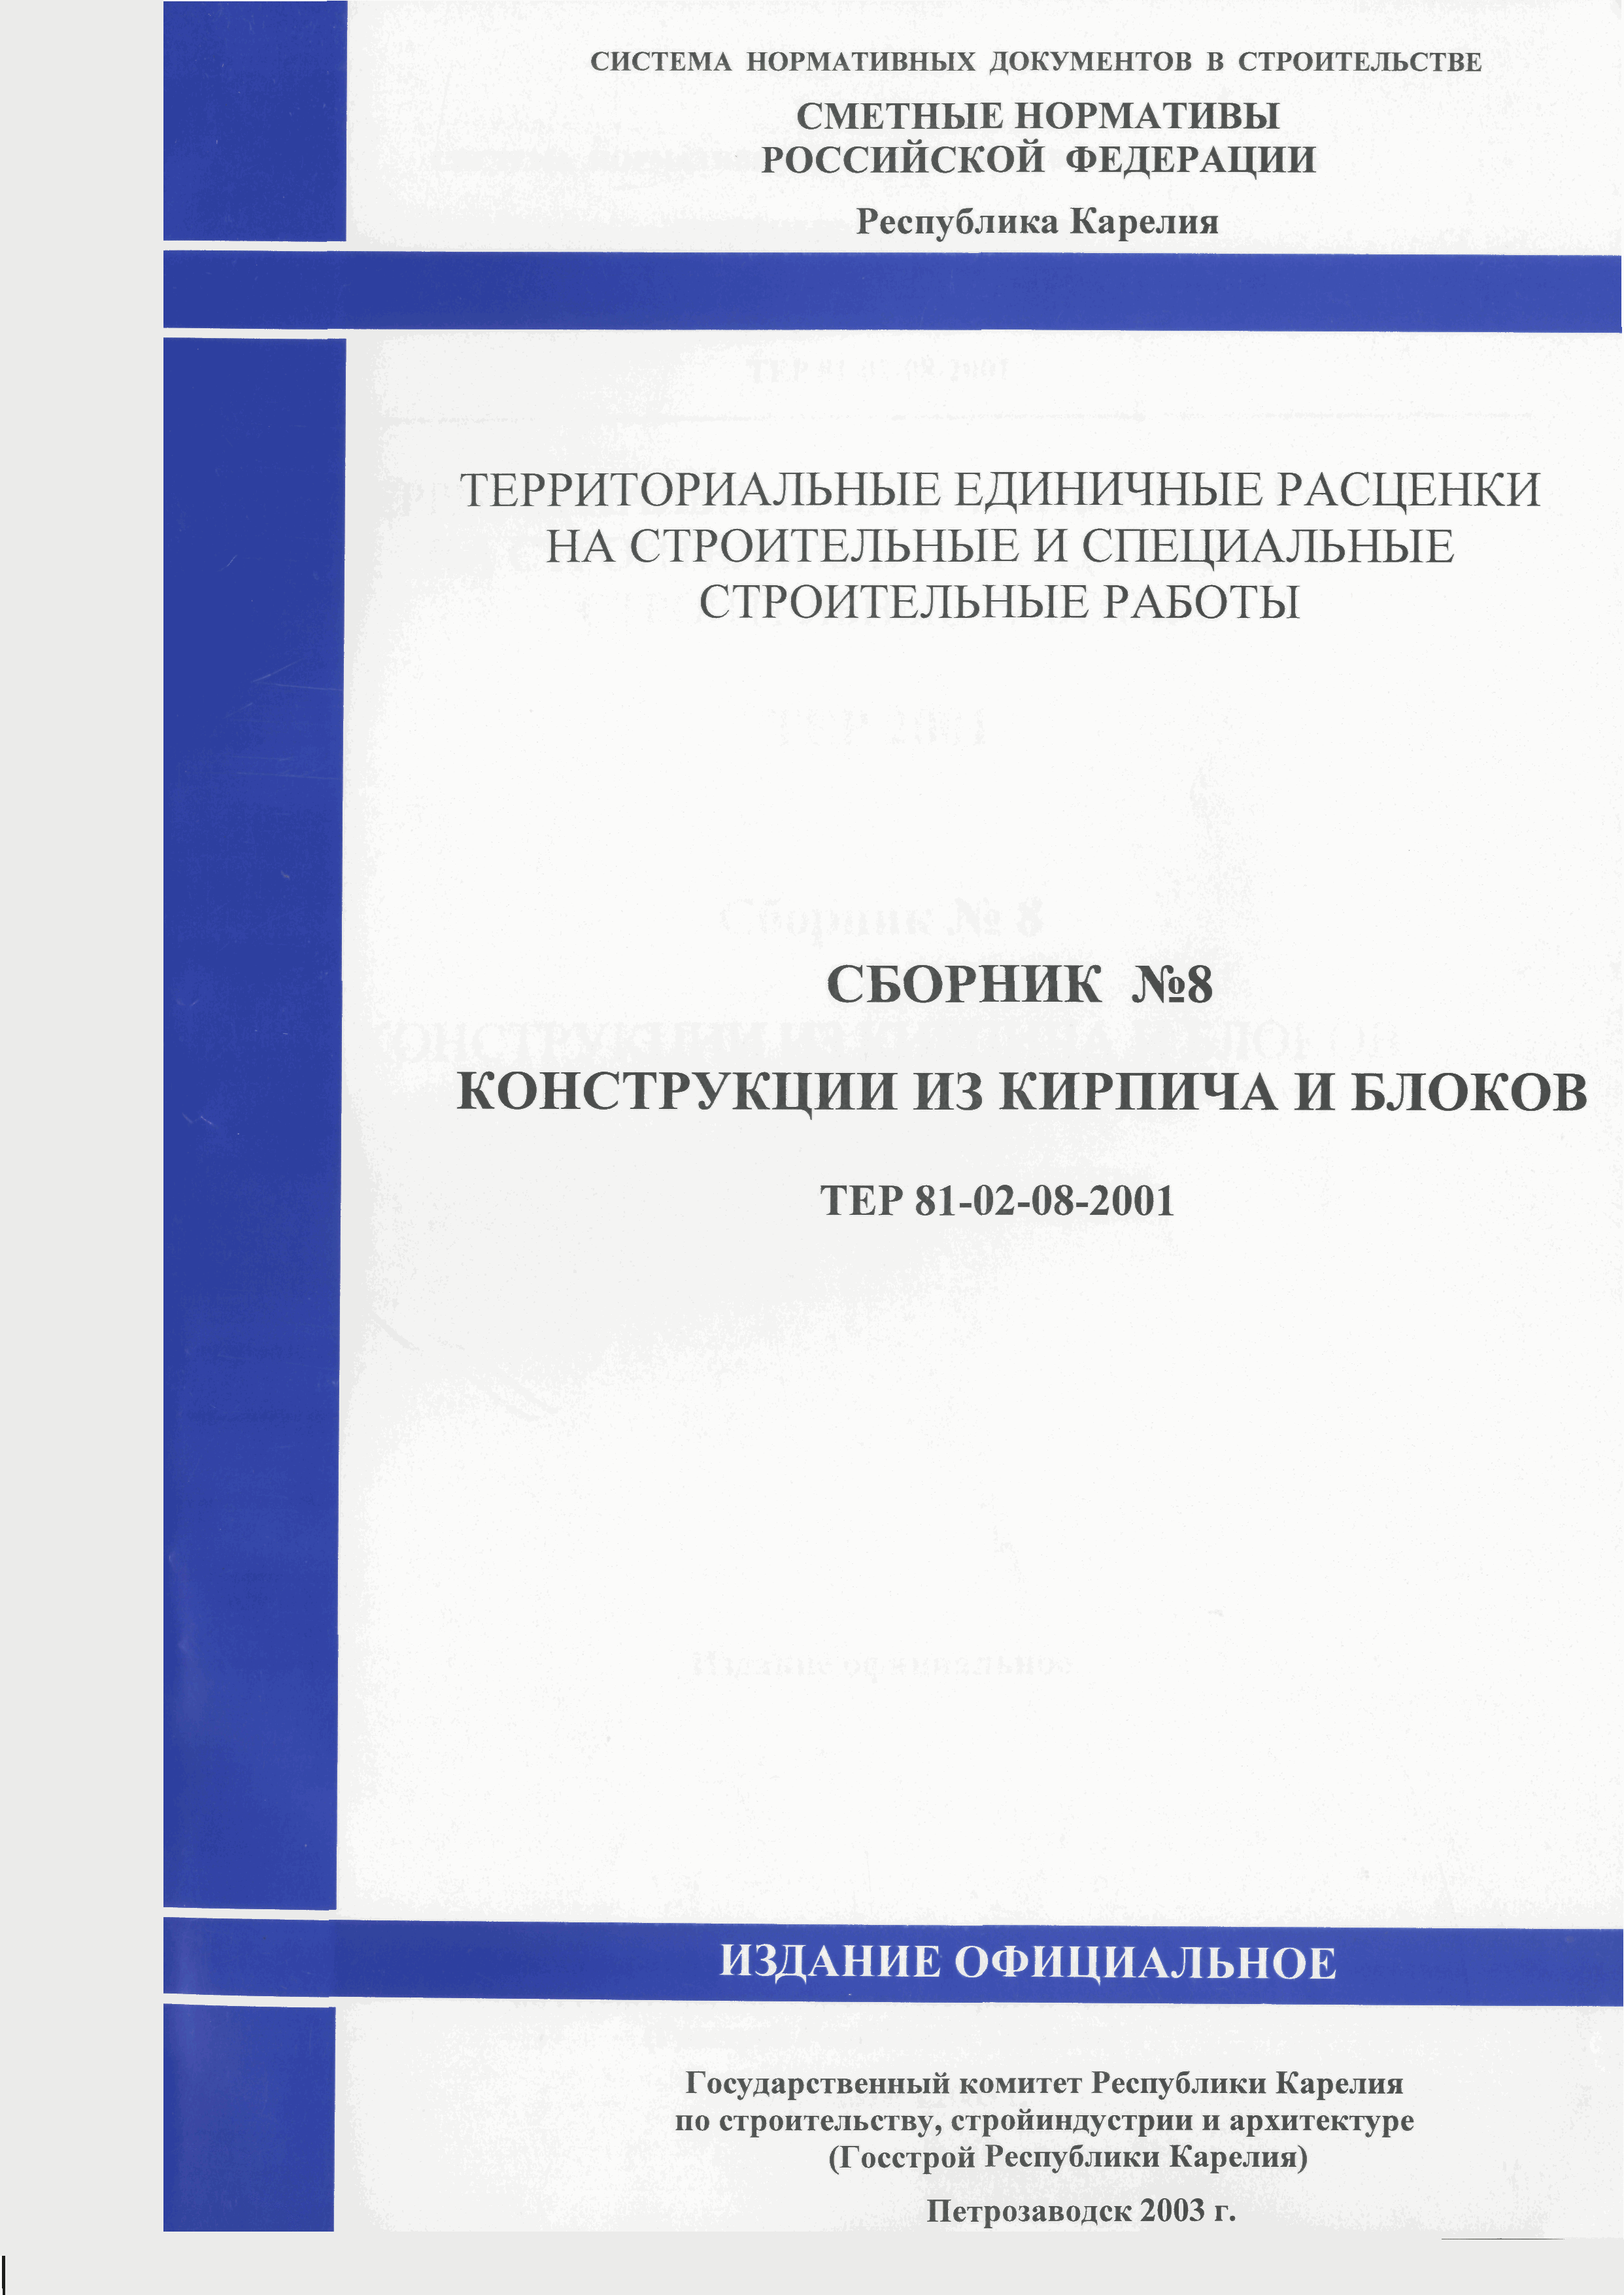 ТЕР Республика Карелия 2001-08